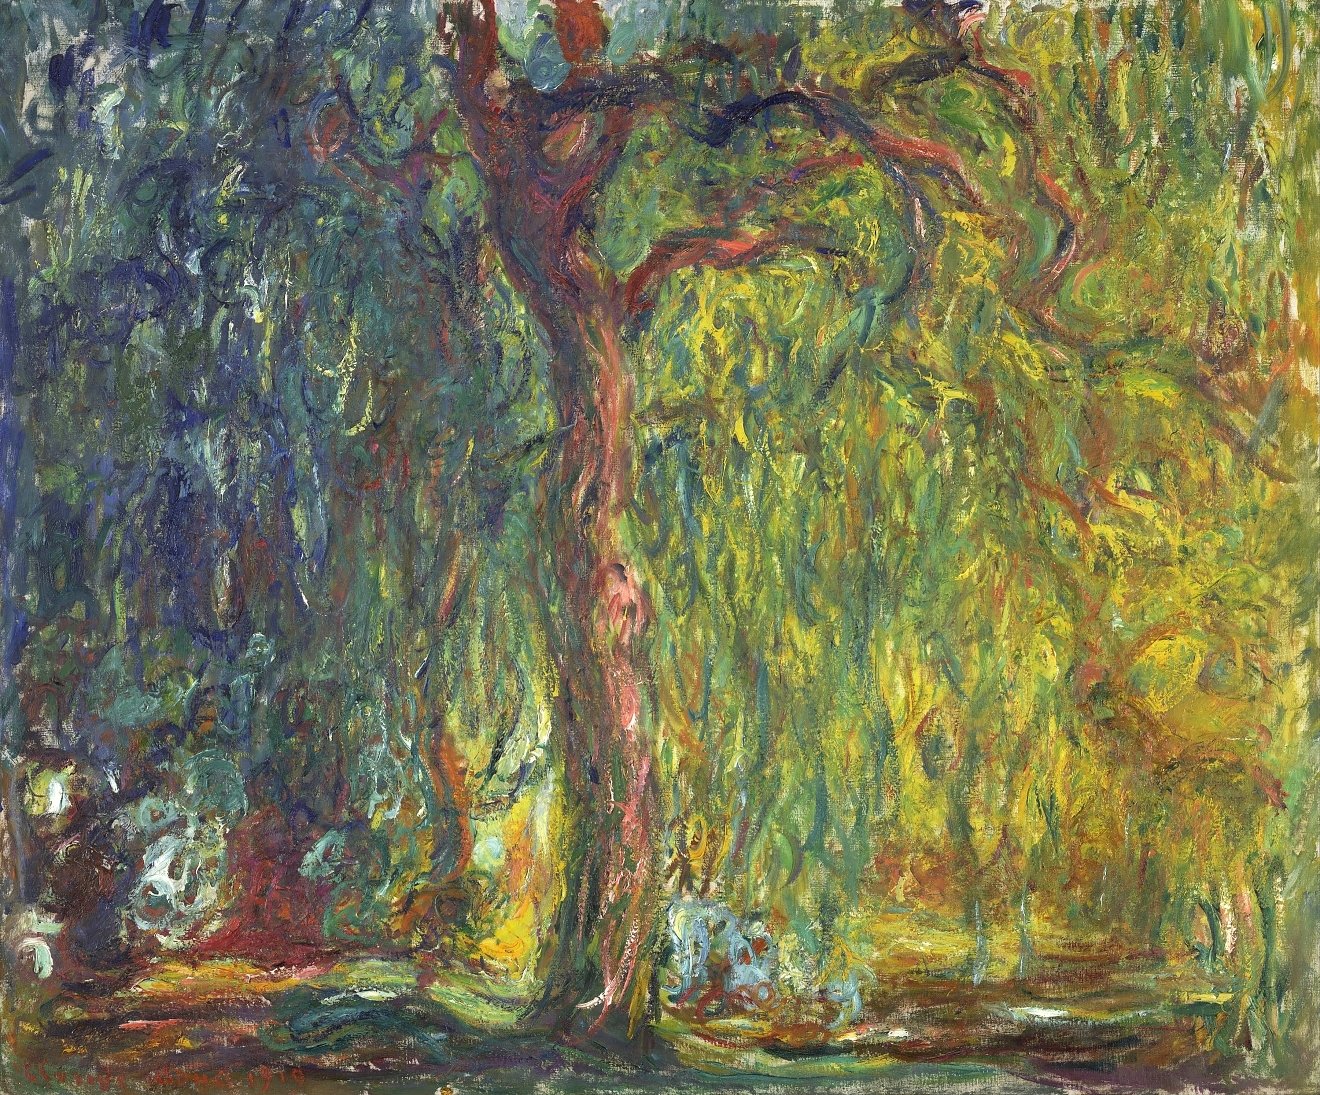 Claude+Monet-1840-1926 (675).jpg